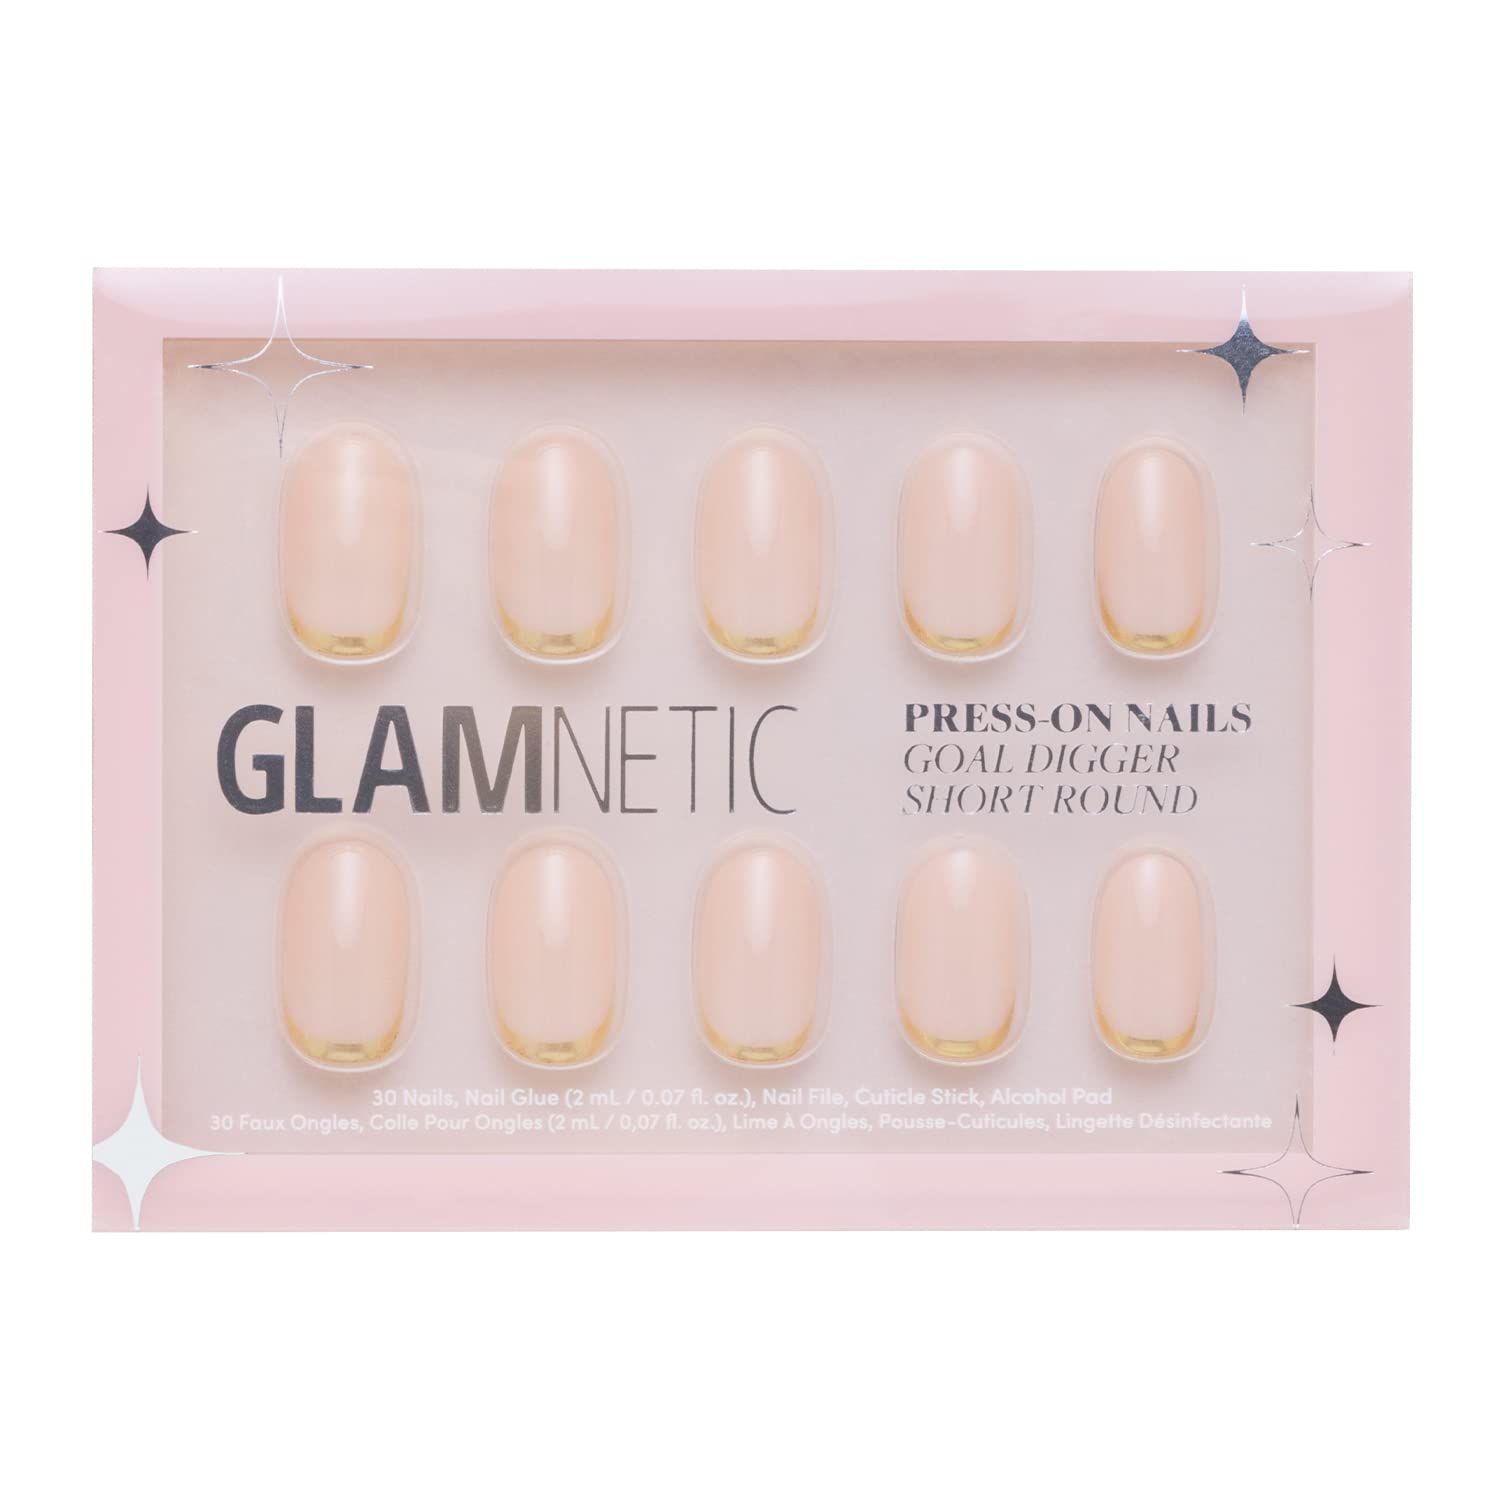 Glamnetic Press On Nails - Goal Digger | Glossy, Semi-Transparent, Short Round Nails, Reusable | ... | Amazon (US)